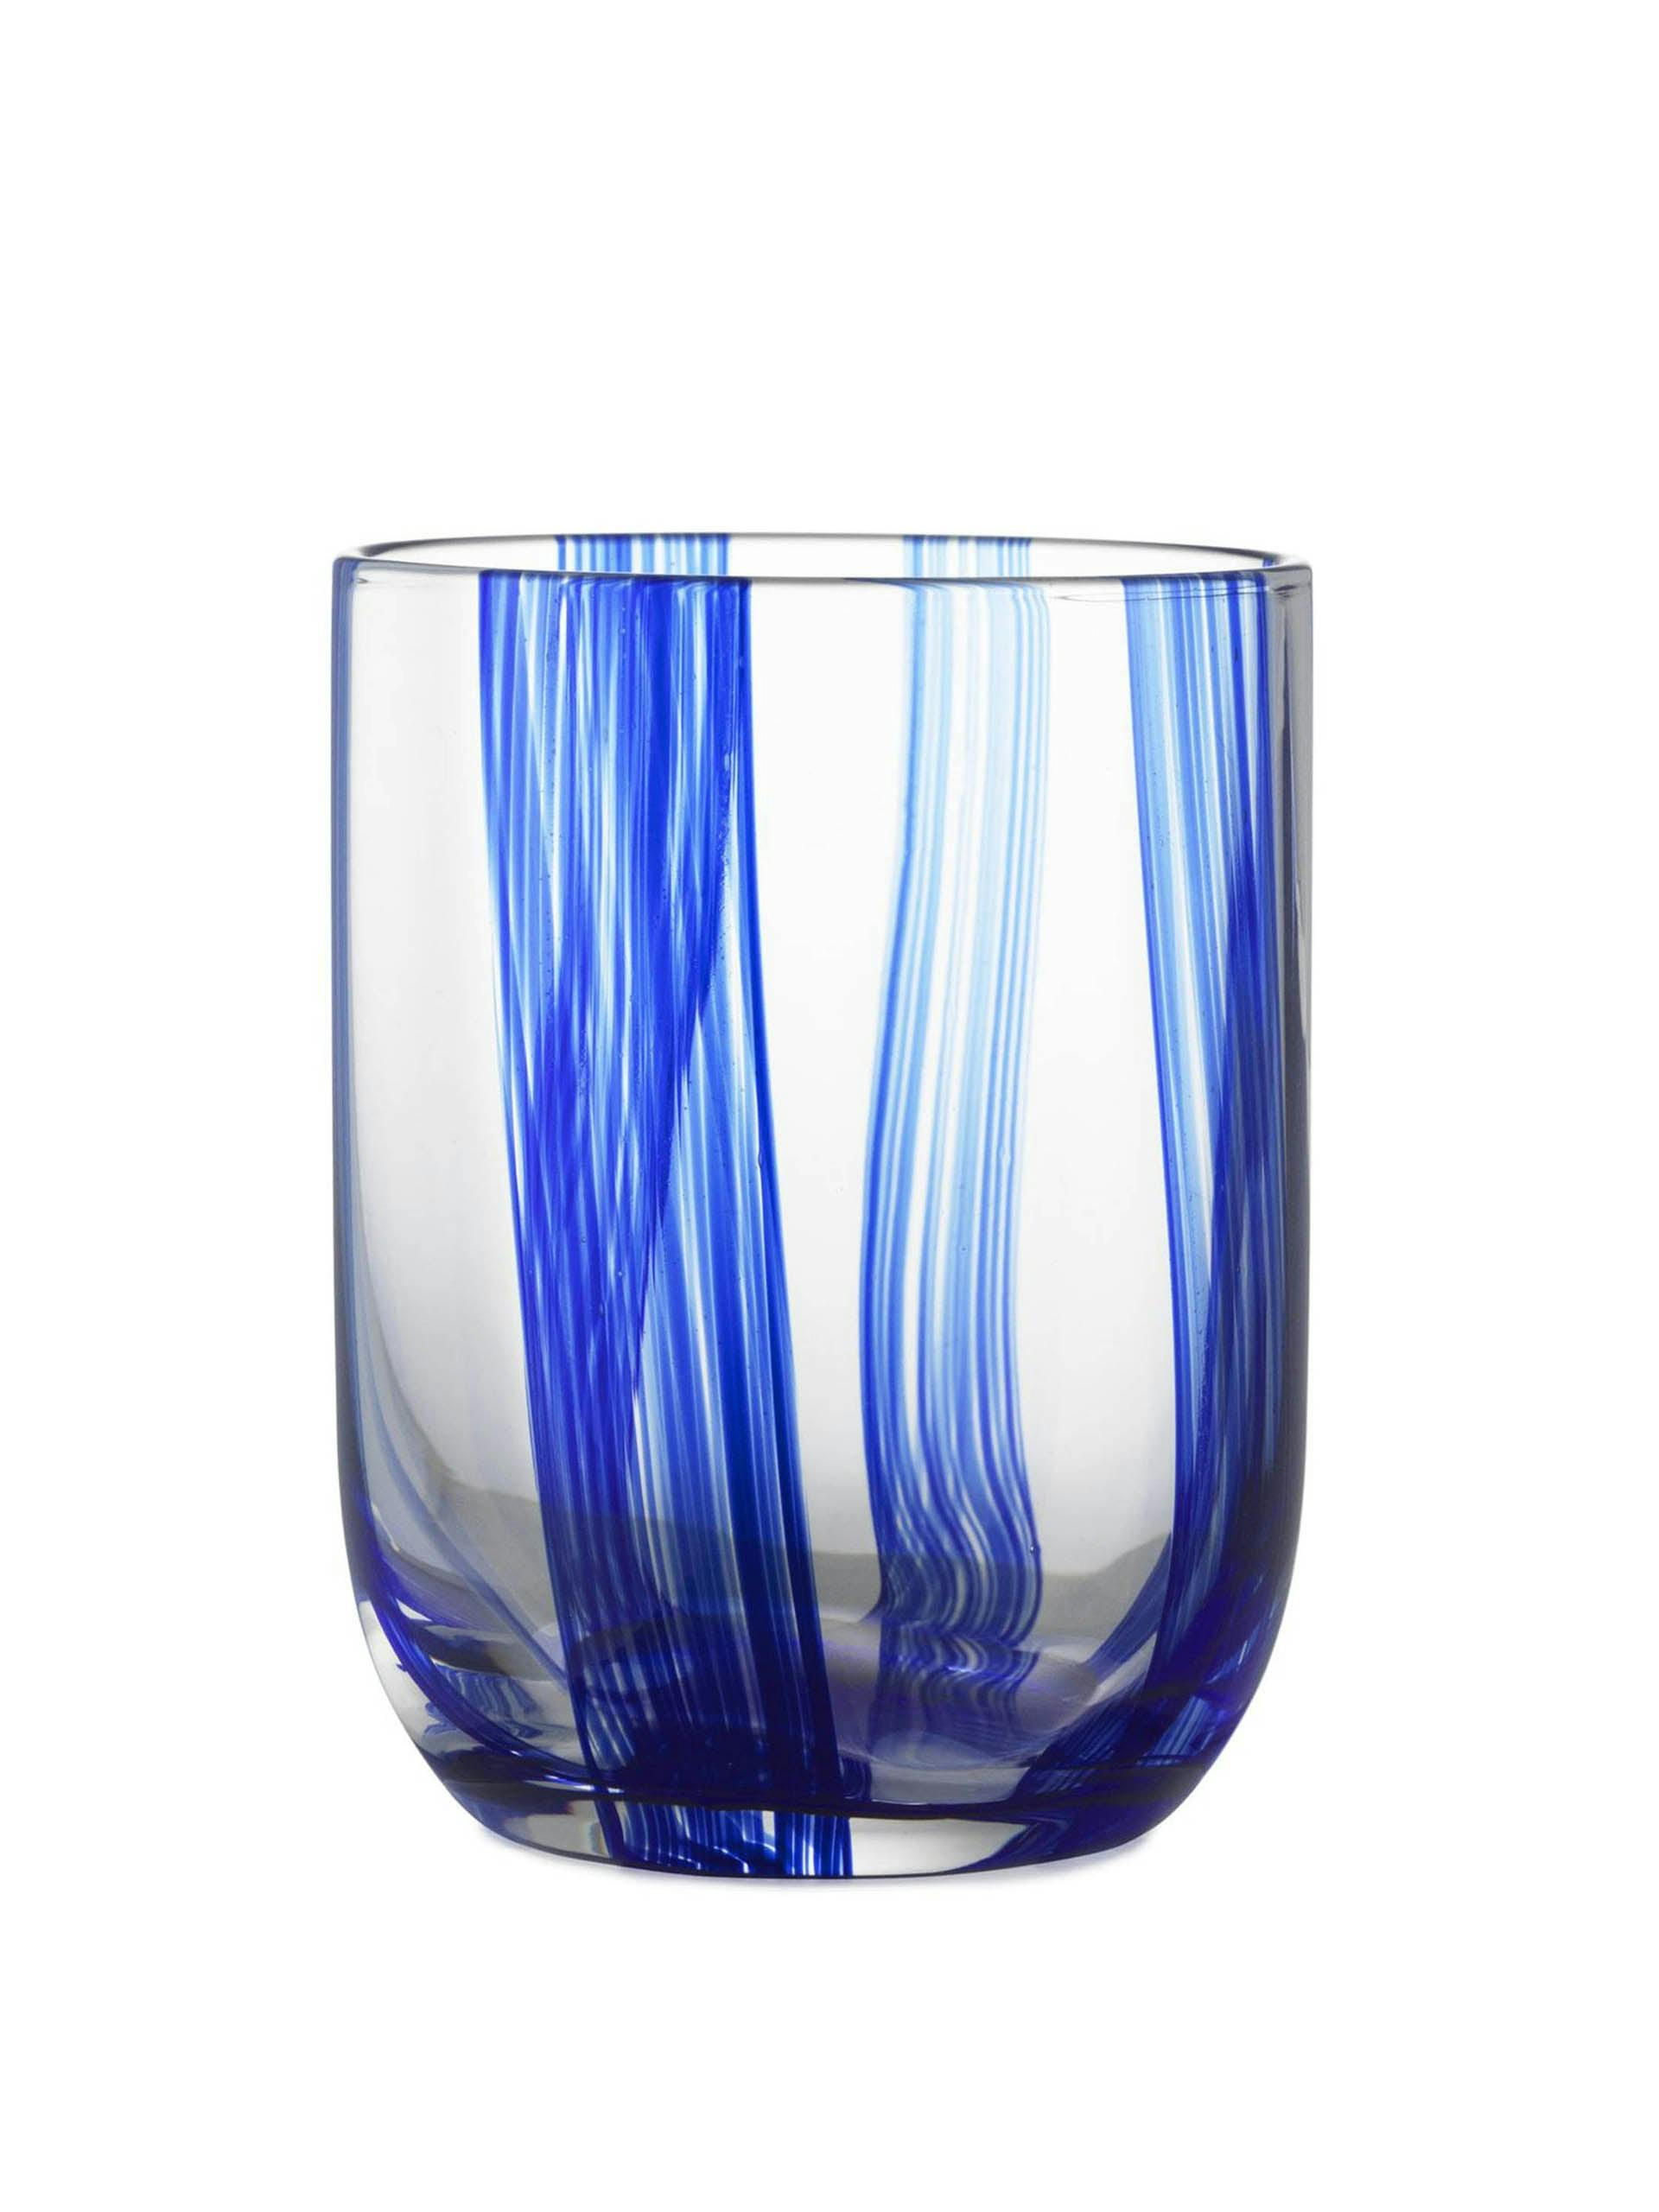 Stripe blue glass